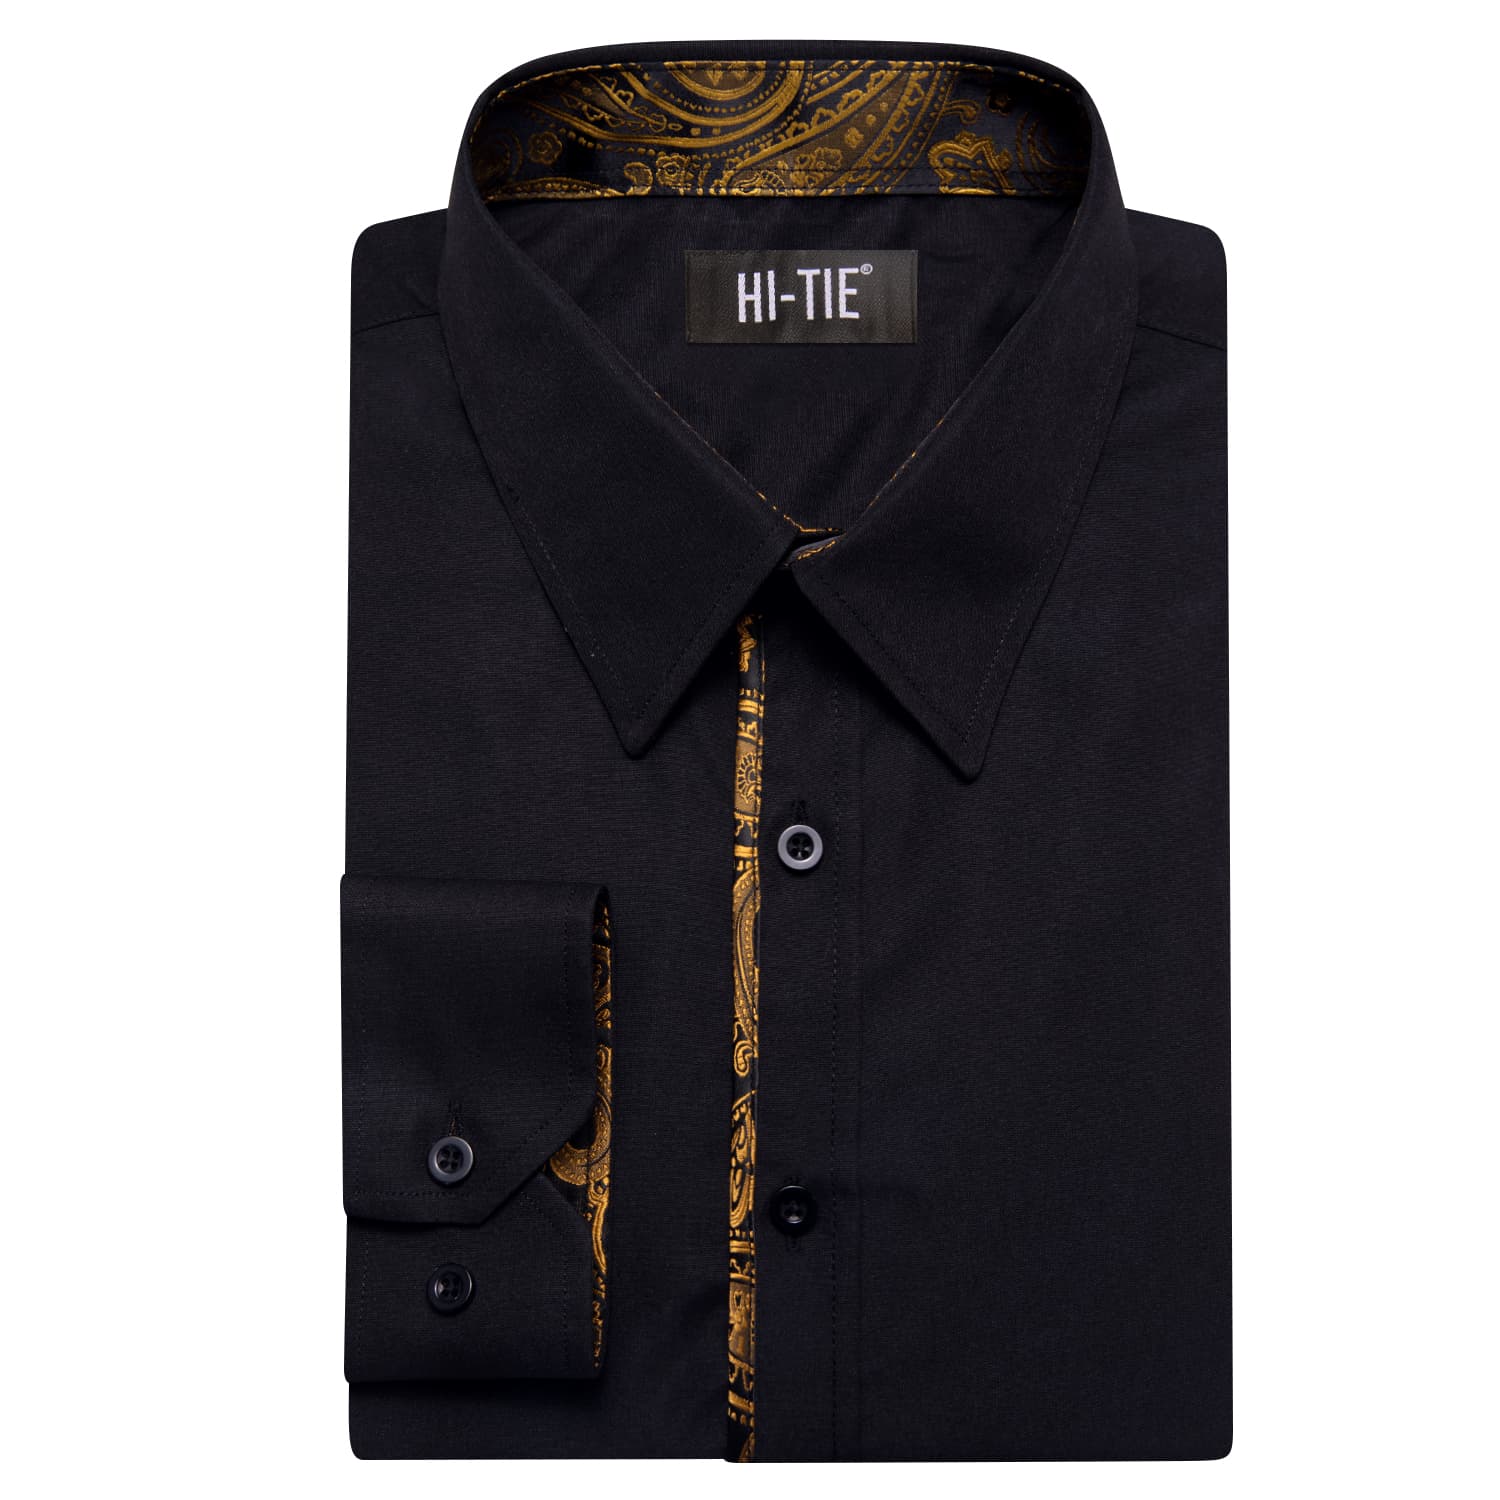 Hi-Tie Black Shirt with Golden Jacquard Collar Solid Shirt